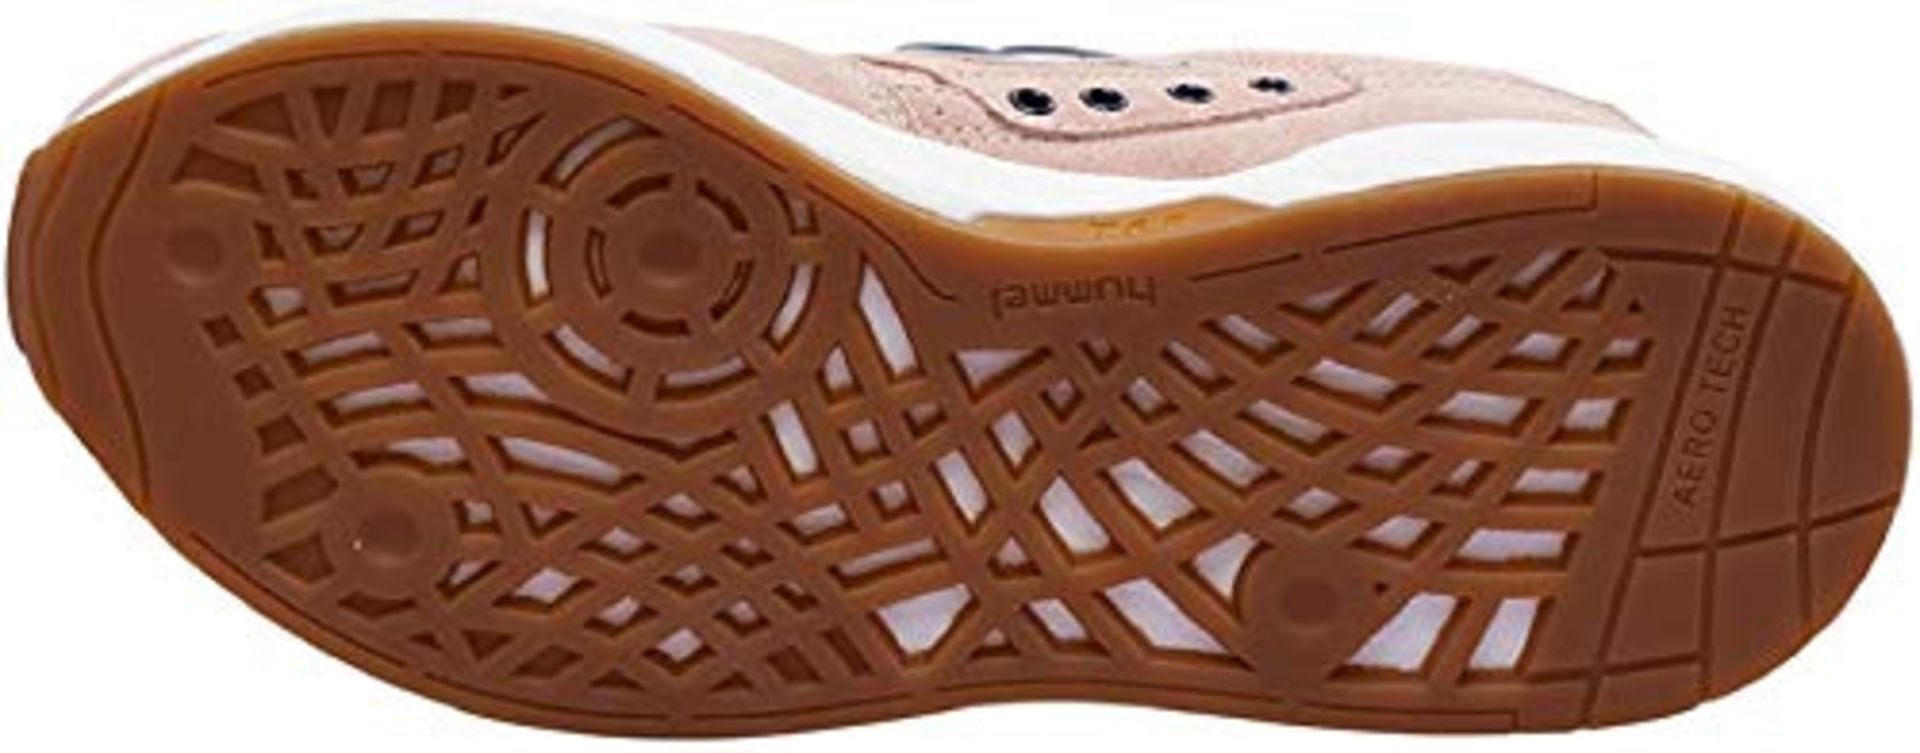 1 x Hummel Marathona Legend Men's Sneakers, rosa/anthrazit, 42 EU - 9 US 201883_3113 Size: 42 EU - - Image 5 of 6